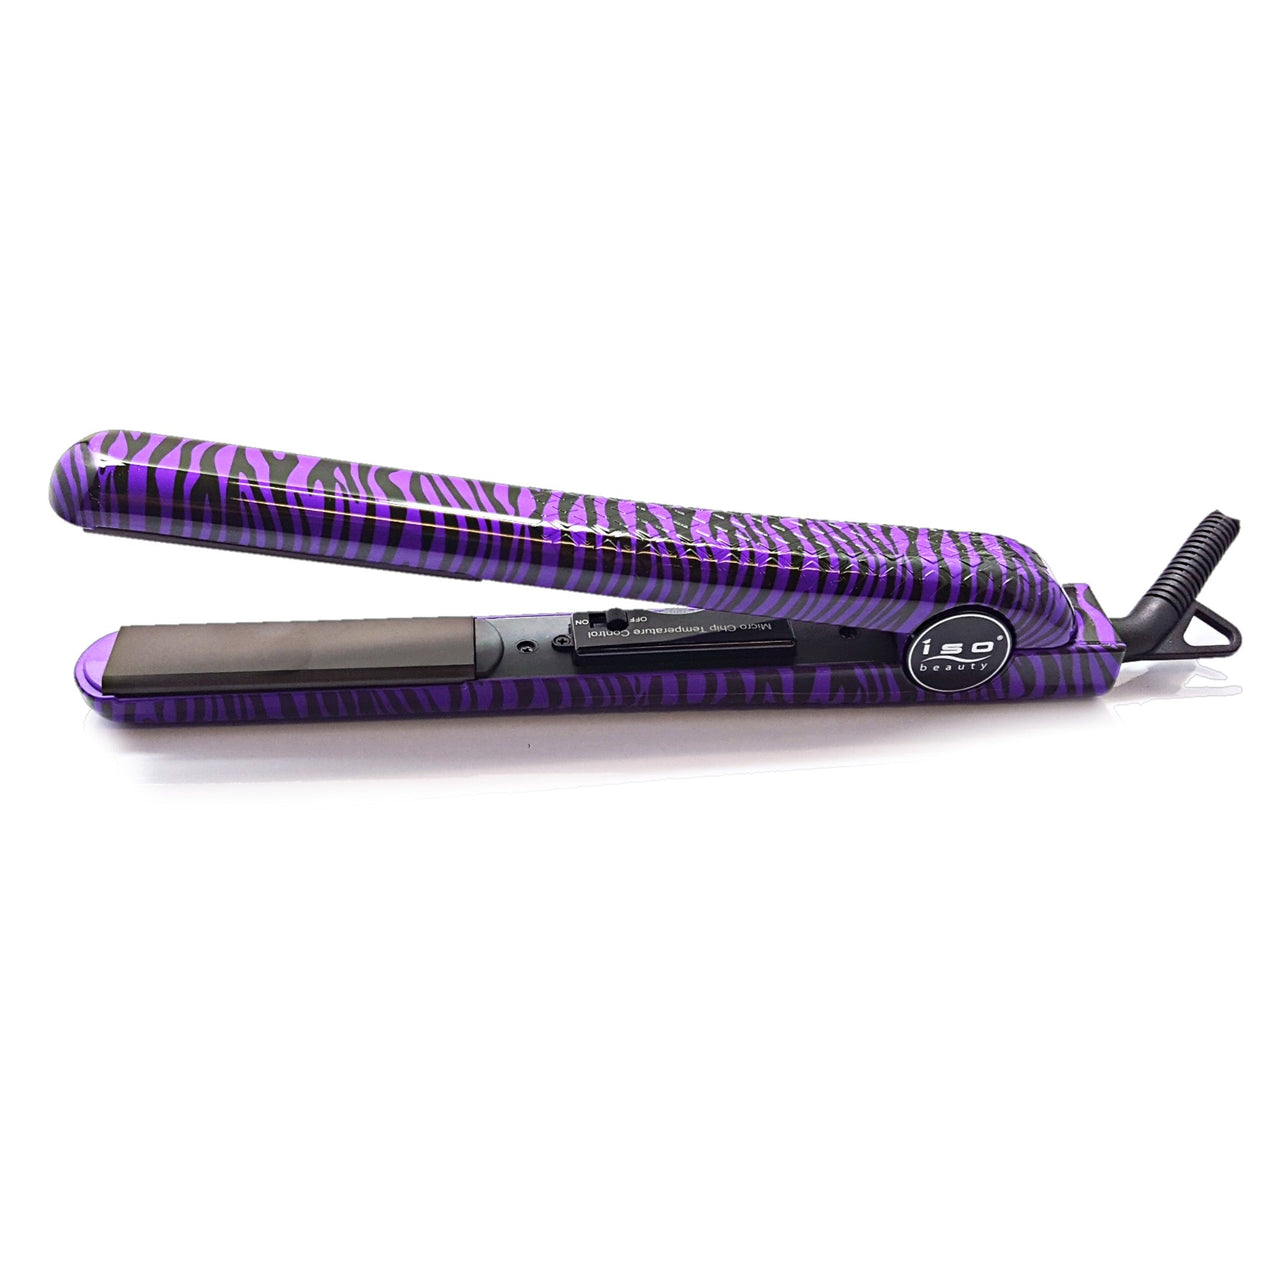 Limited Edition Purple Zebra 1.25" Ceramic Flat Iron Hair Straightener with Adjustable Temperature